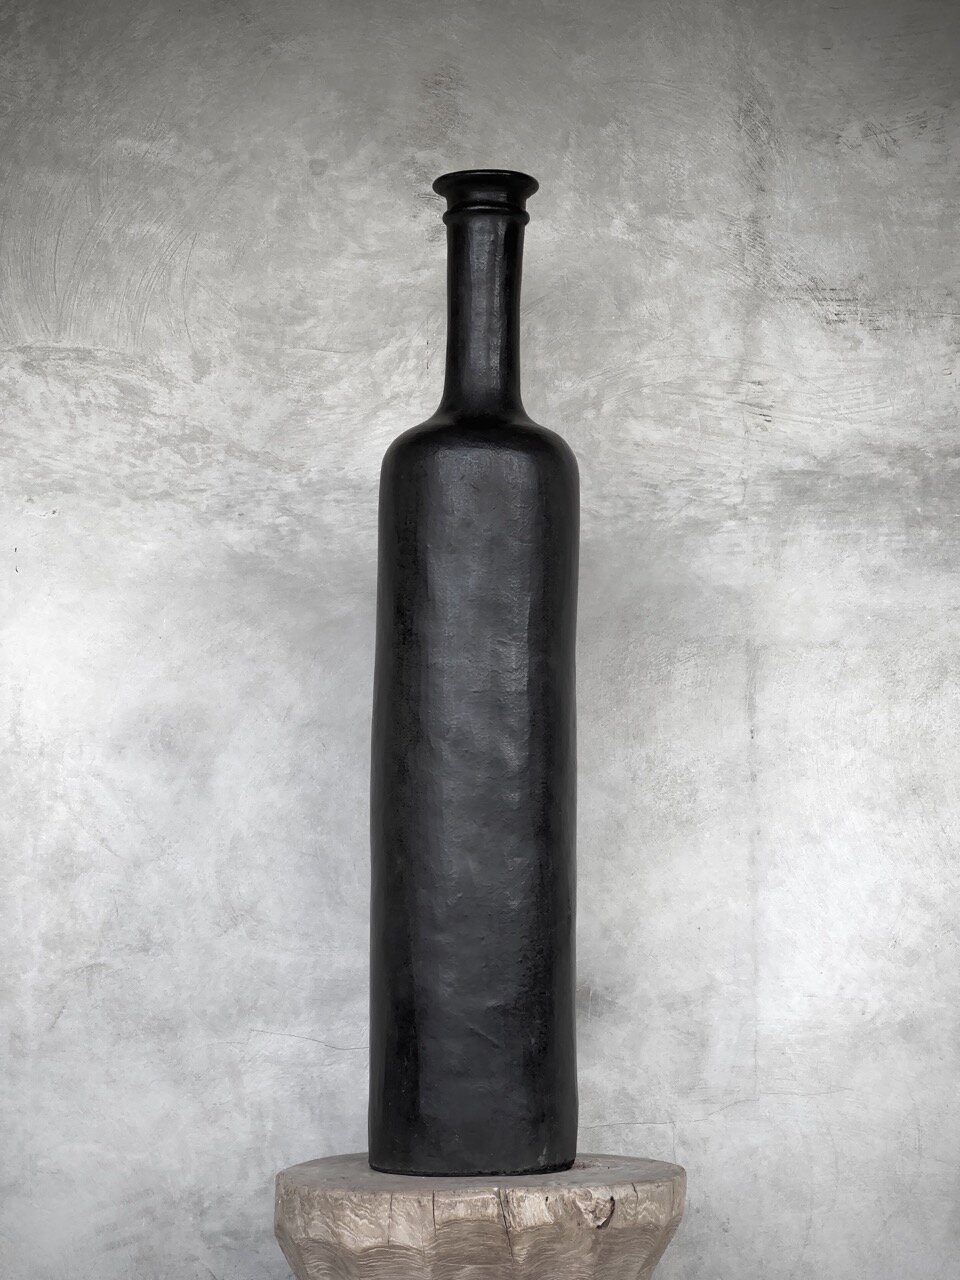 BOTOL large clay bottle, antique black